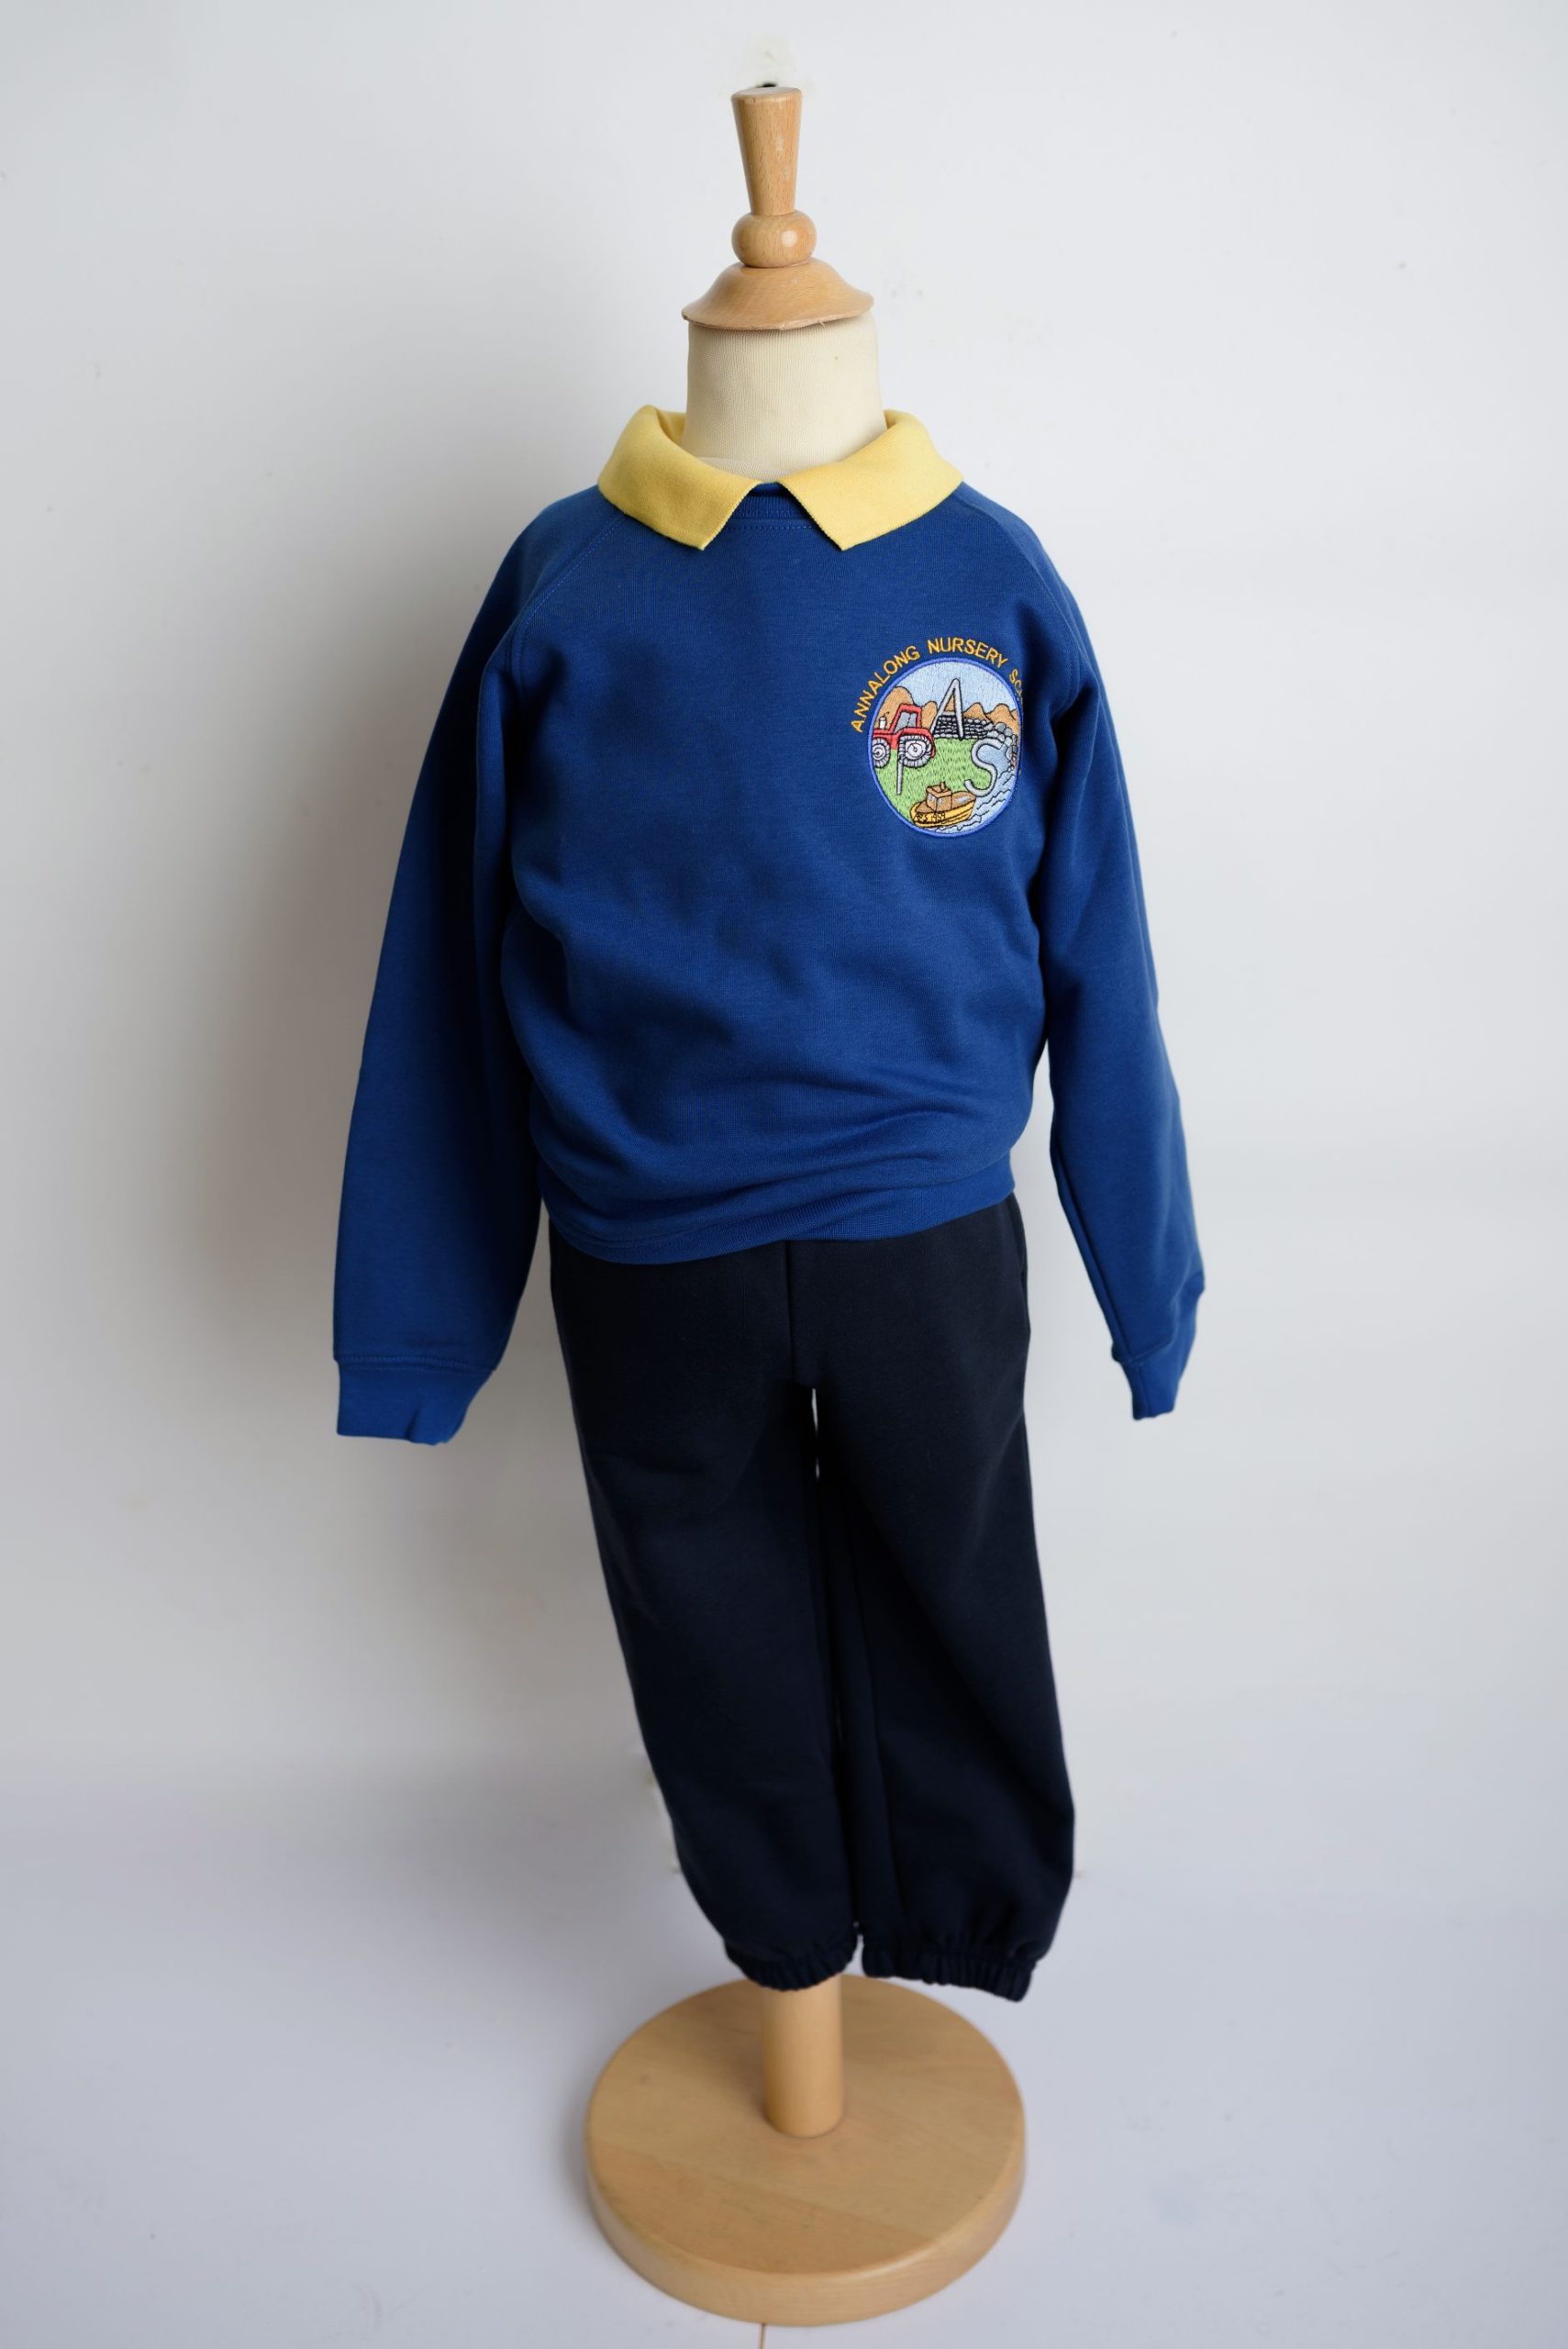 Annalong Nursery School Uniform